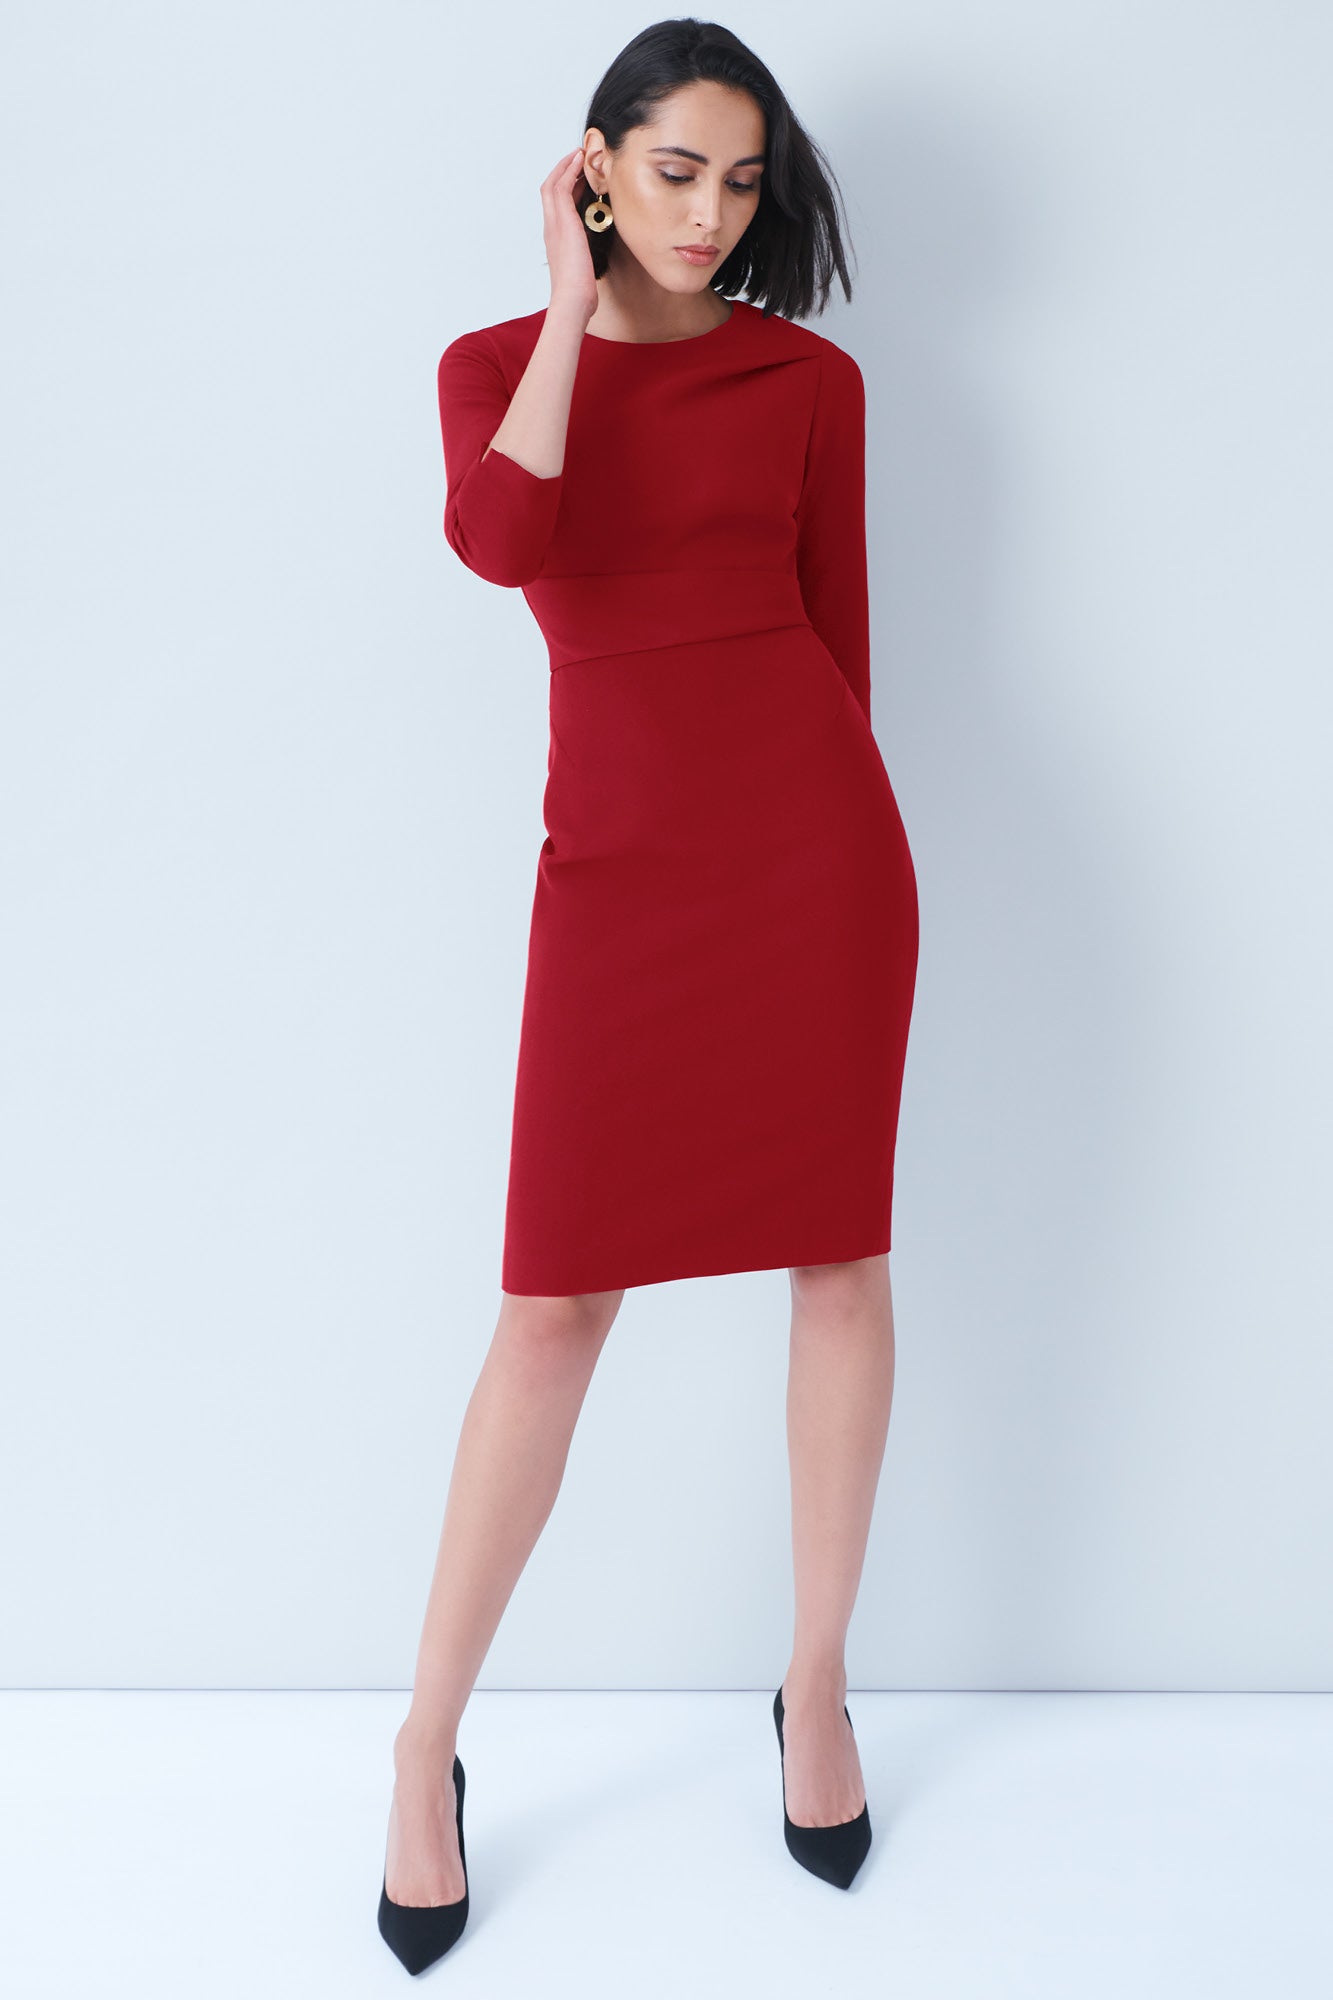 Kensington Red Dress